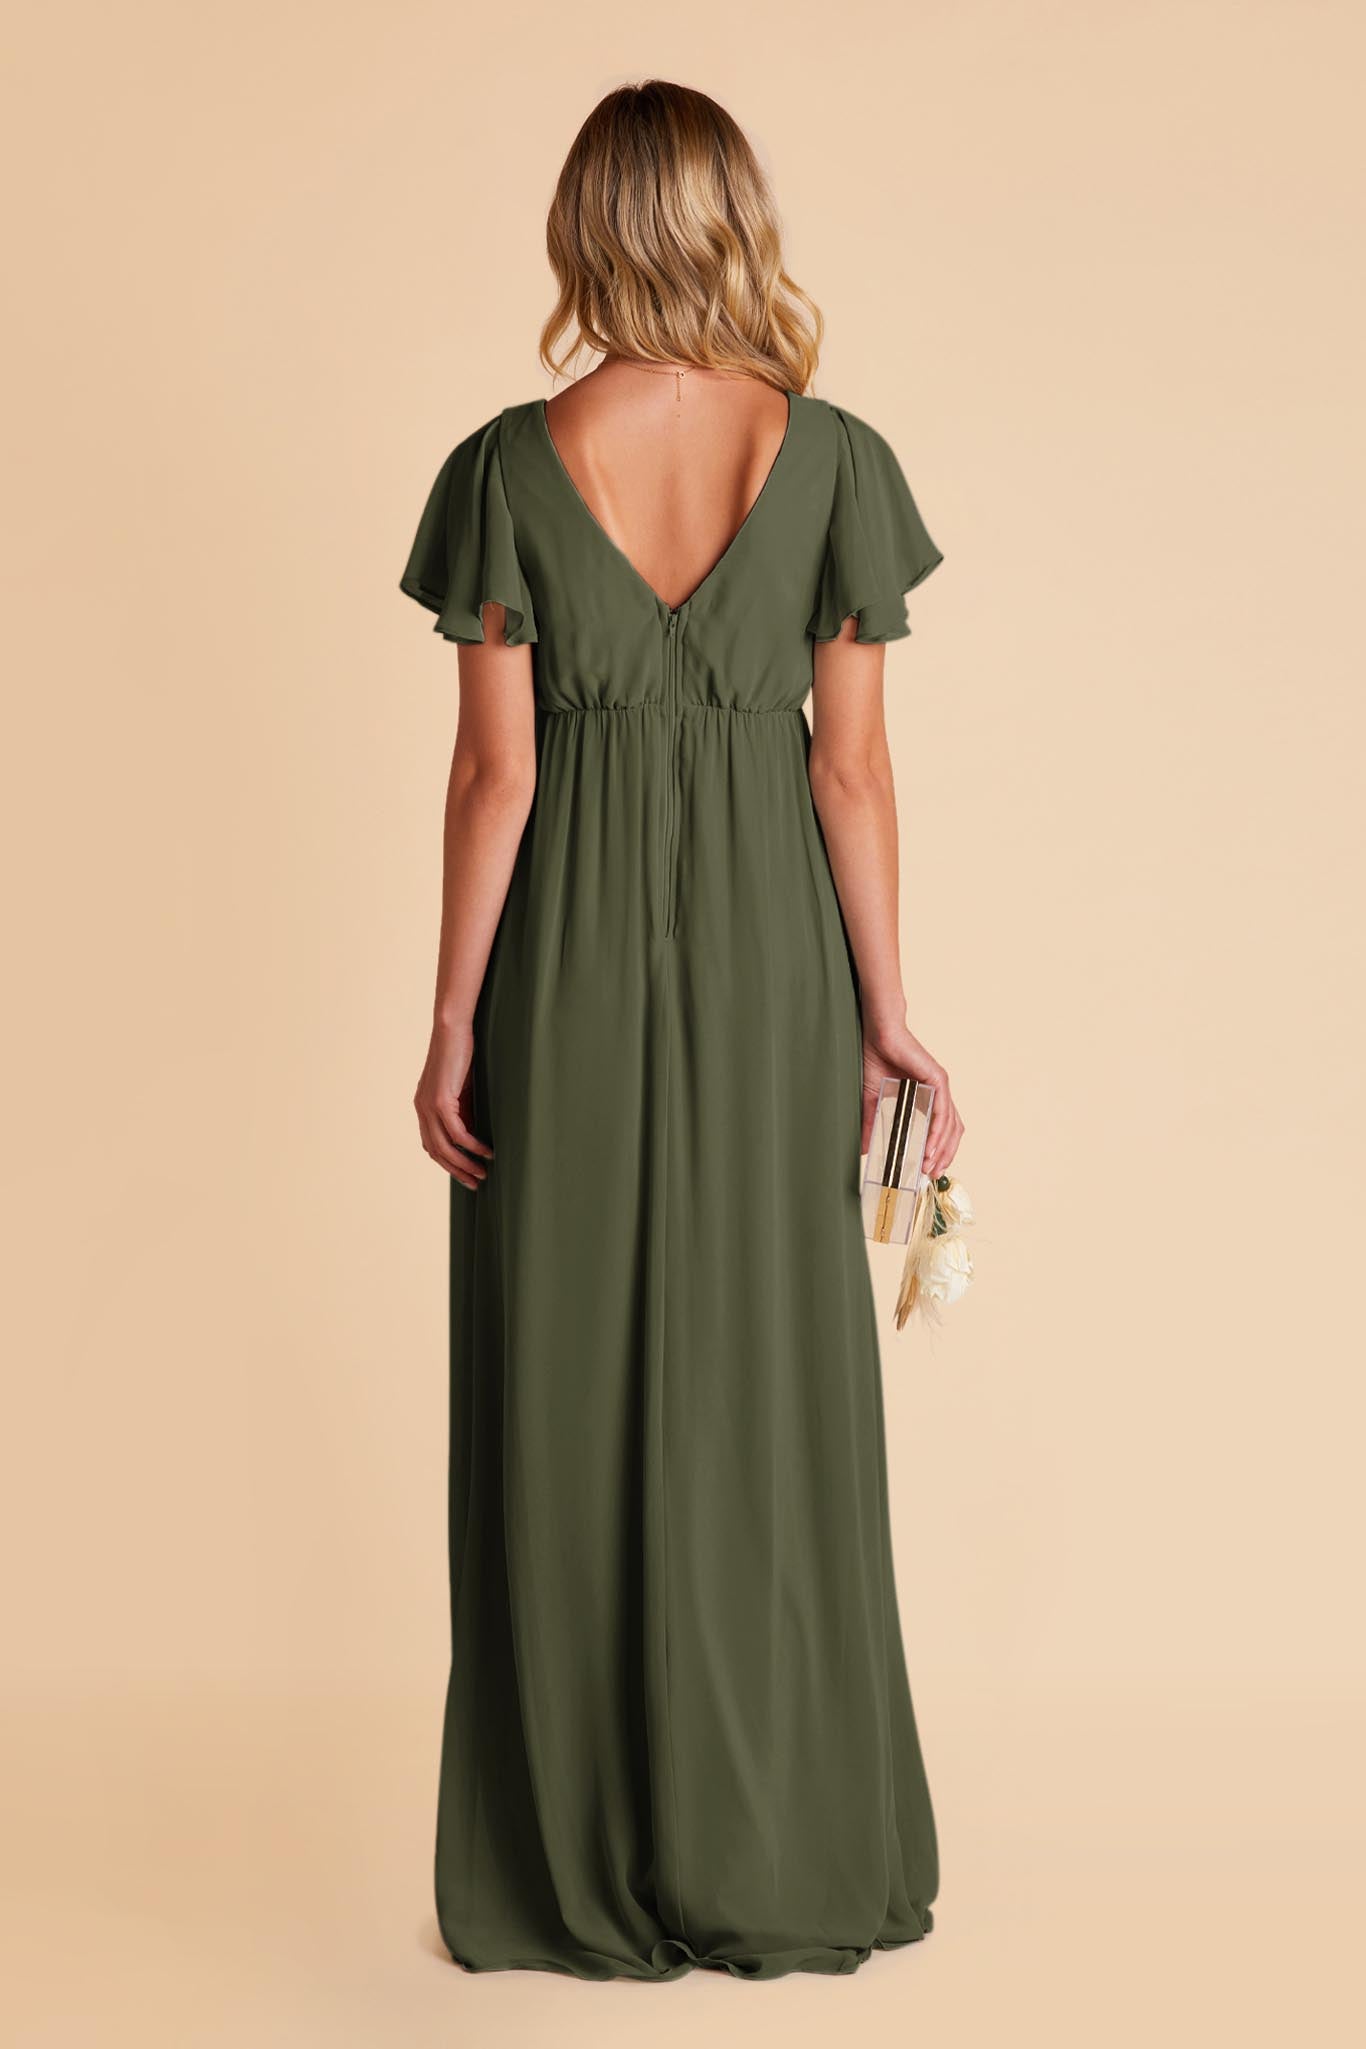 Olive Hannah Empire Dress by Birdy Grey